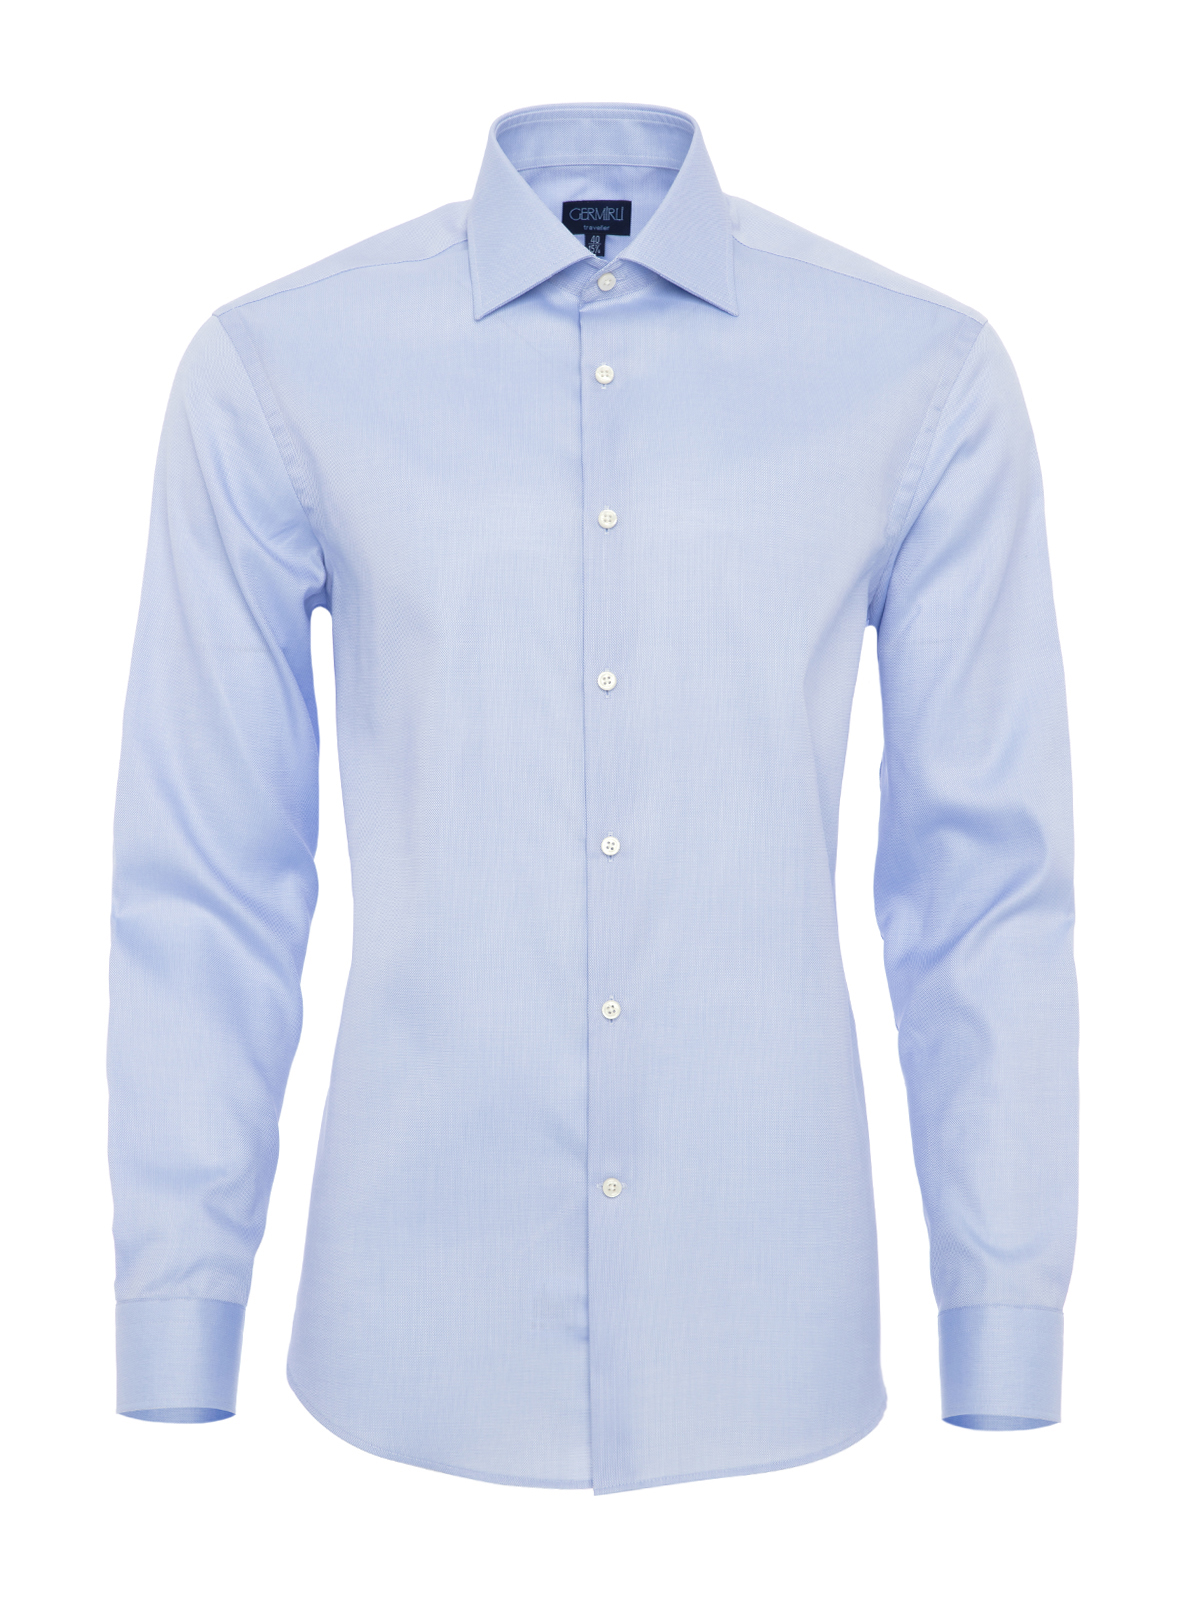 Germirli - Germirli Non Iron Blue Oxford Semi Spread Tailor Fit Journey Shirt